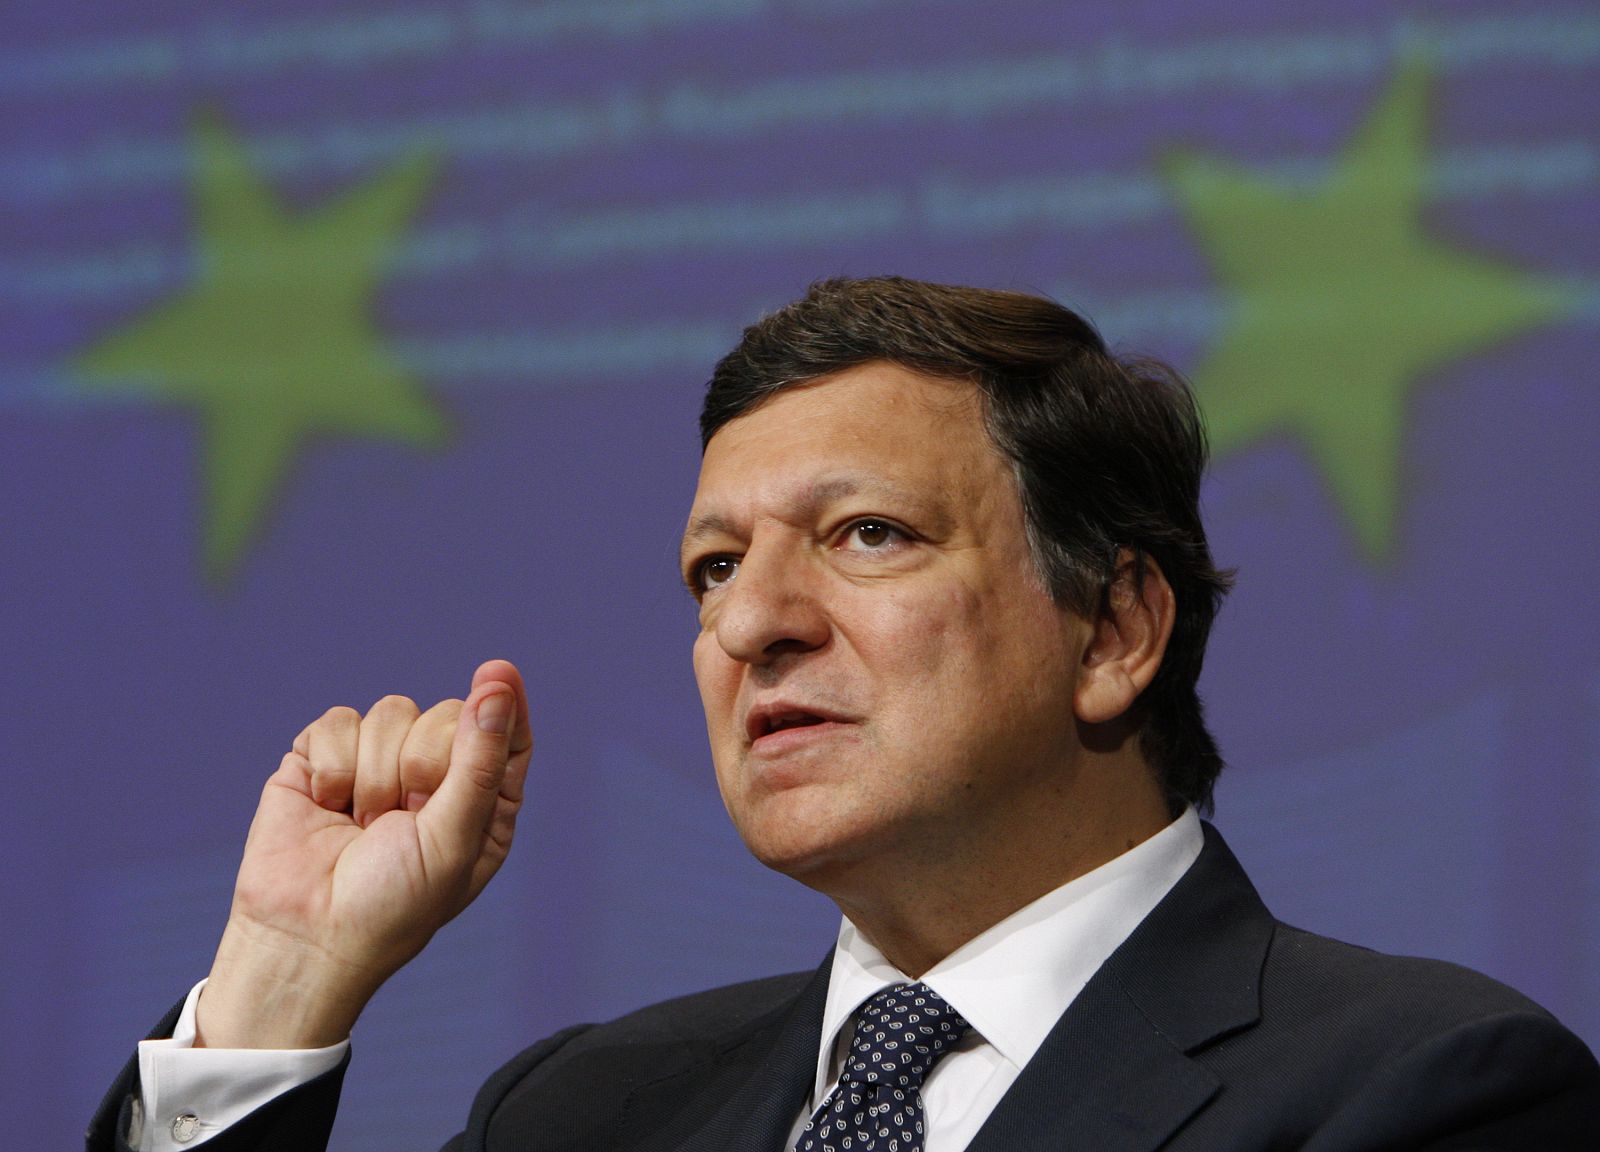 EC President Barroso addresses news conference in Brussels